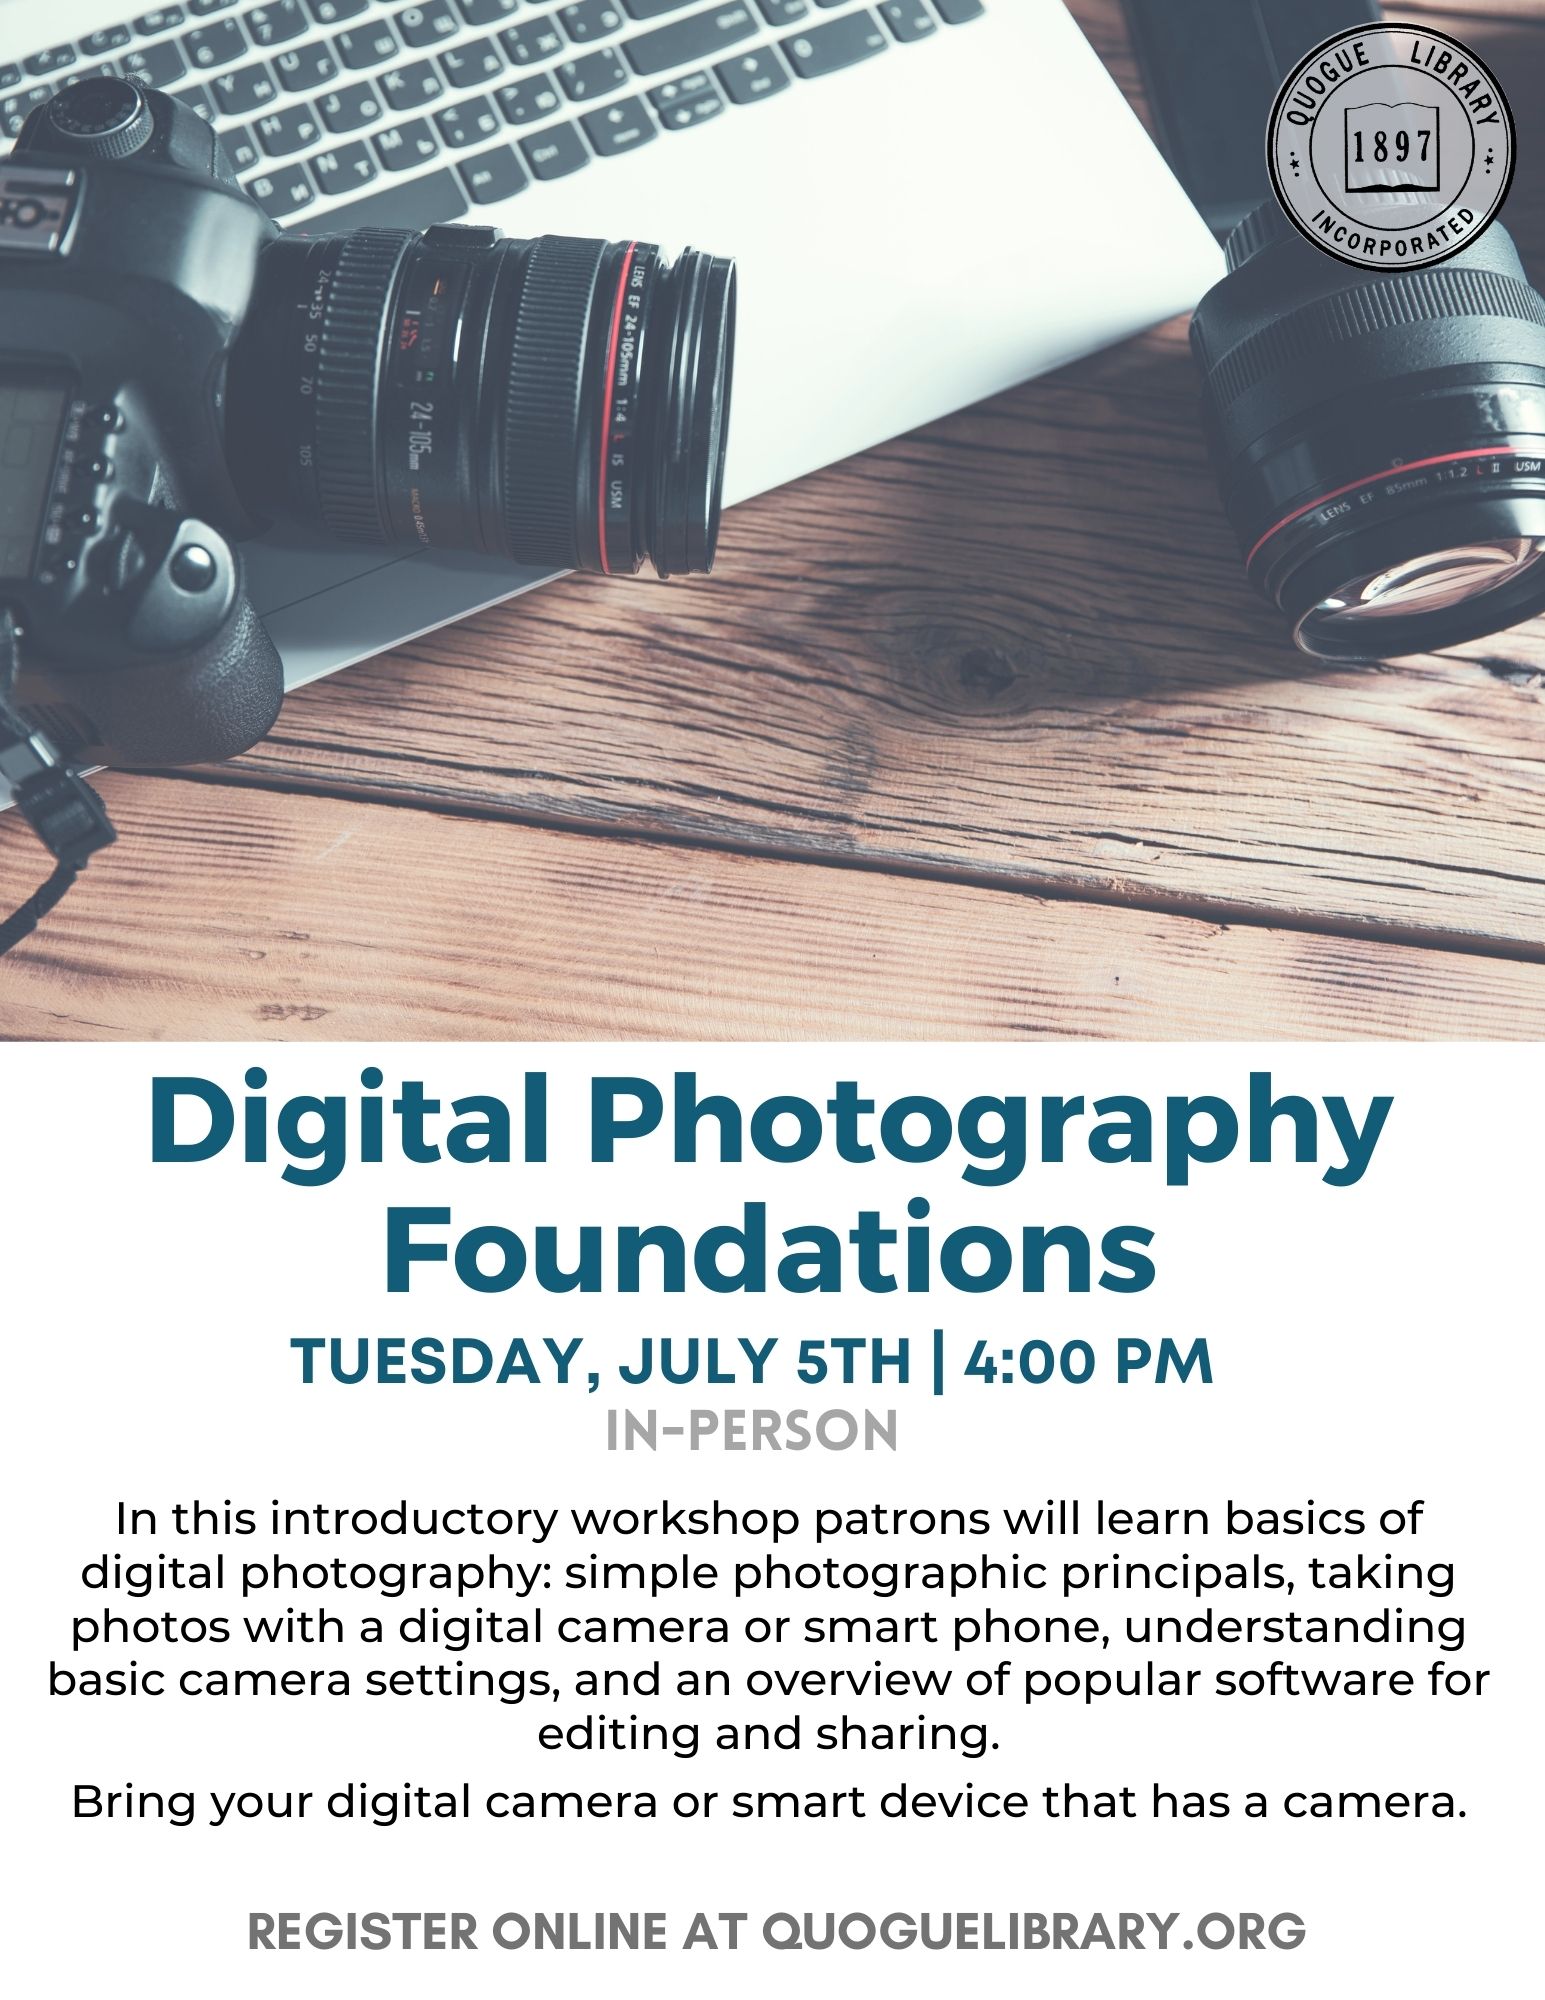 Digital photography foundations